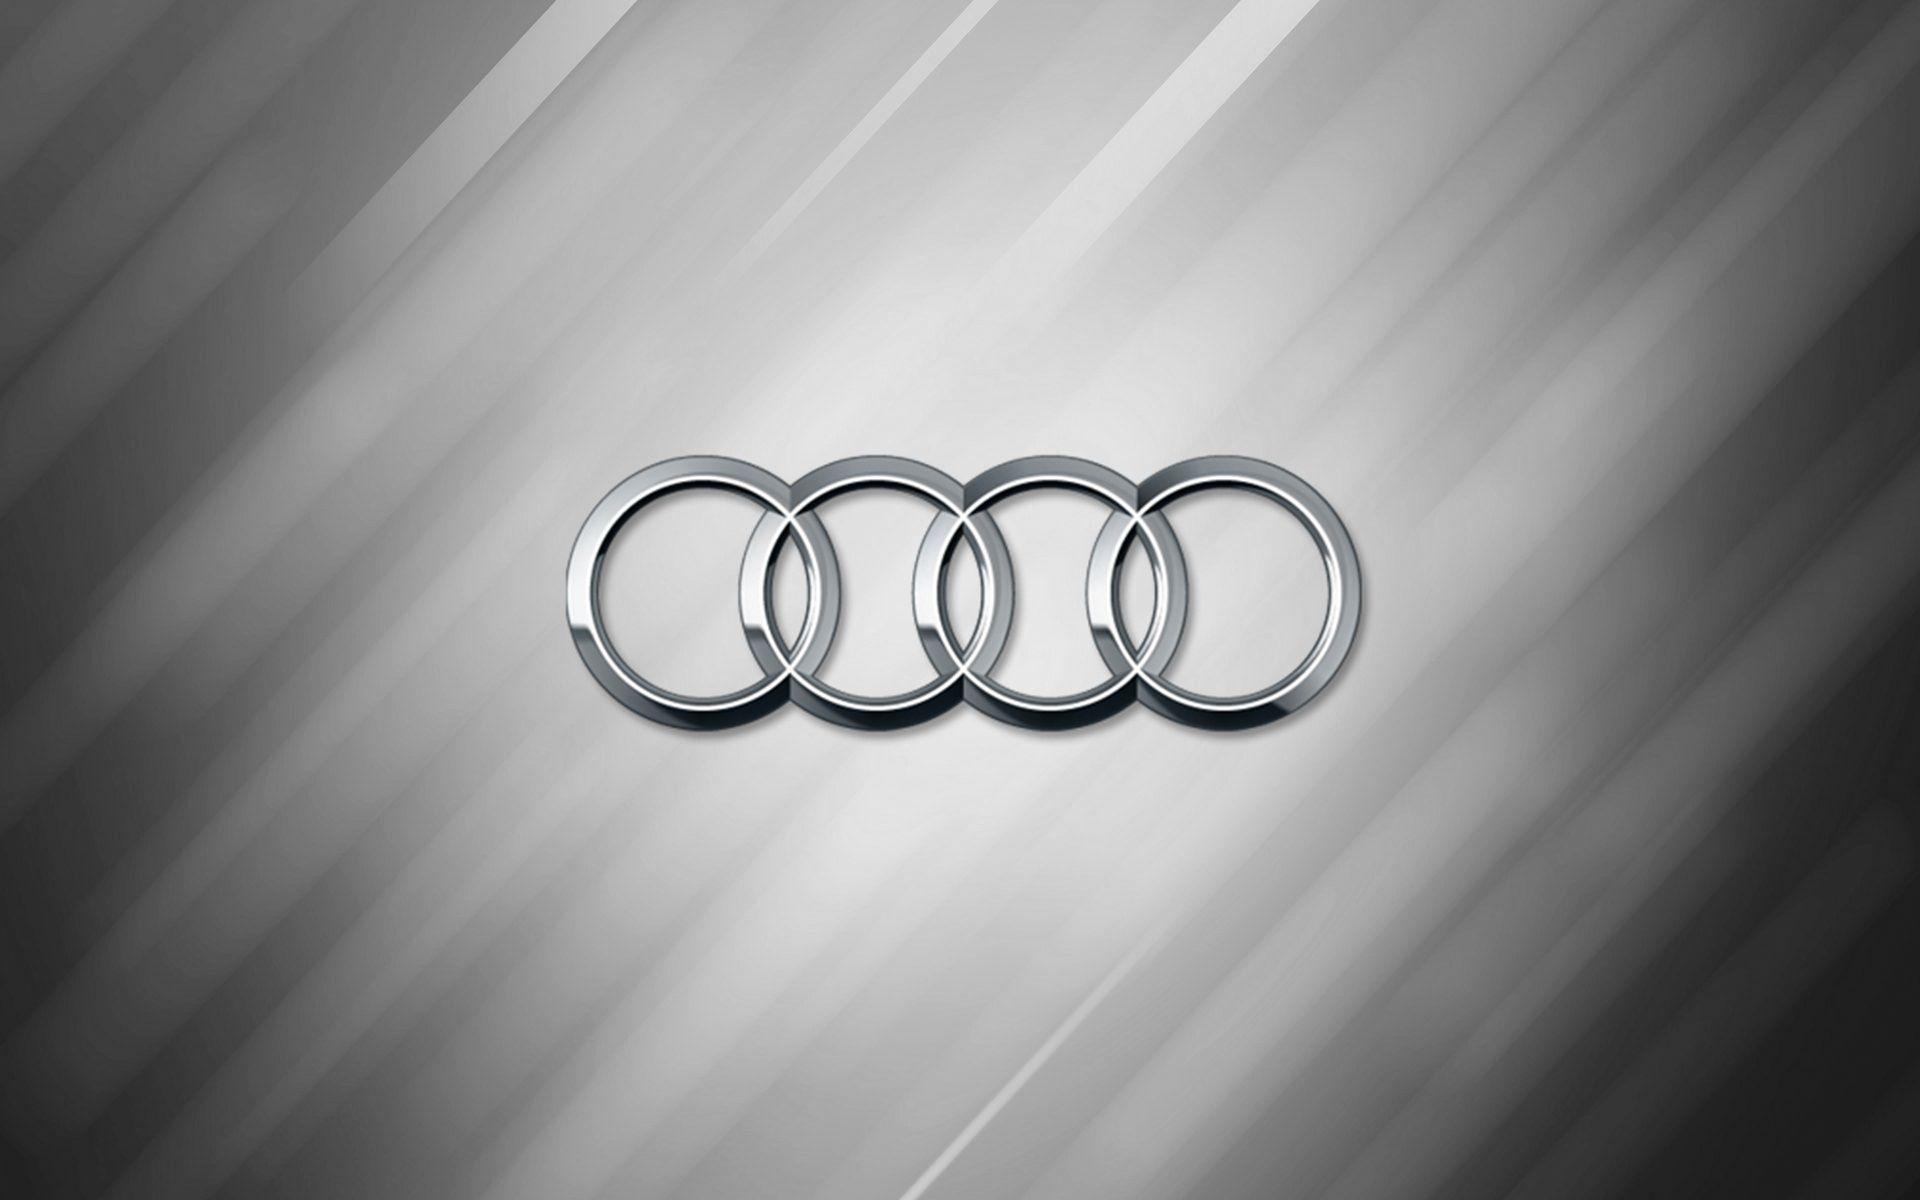 Audi Logo Wallpapers Top Free Audi Logo Backgrounds Wallpaperaccess